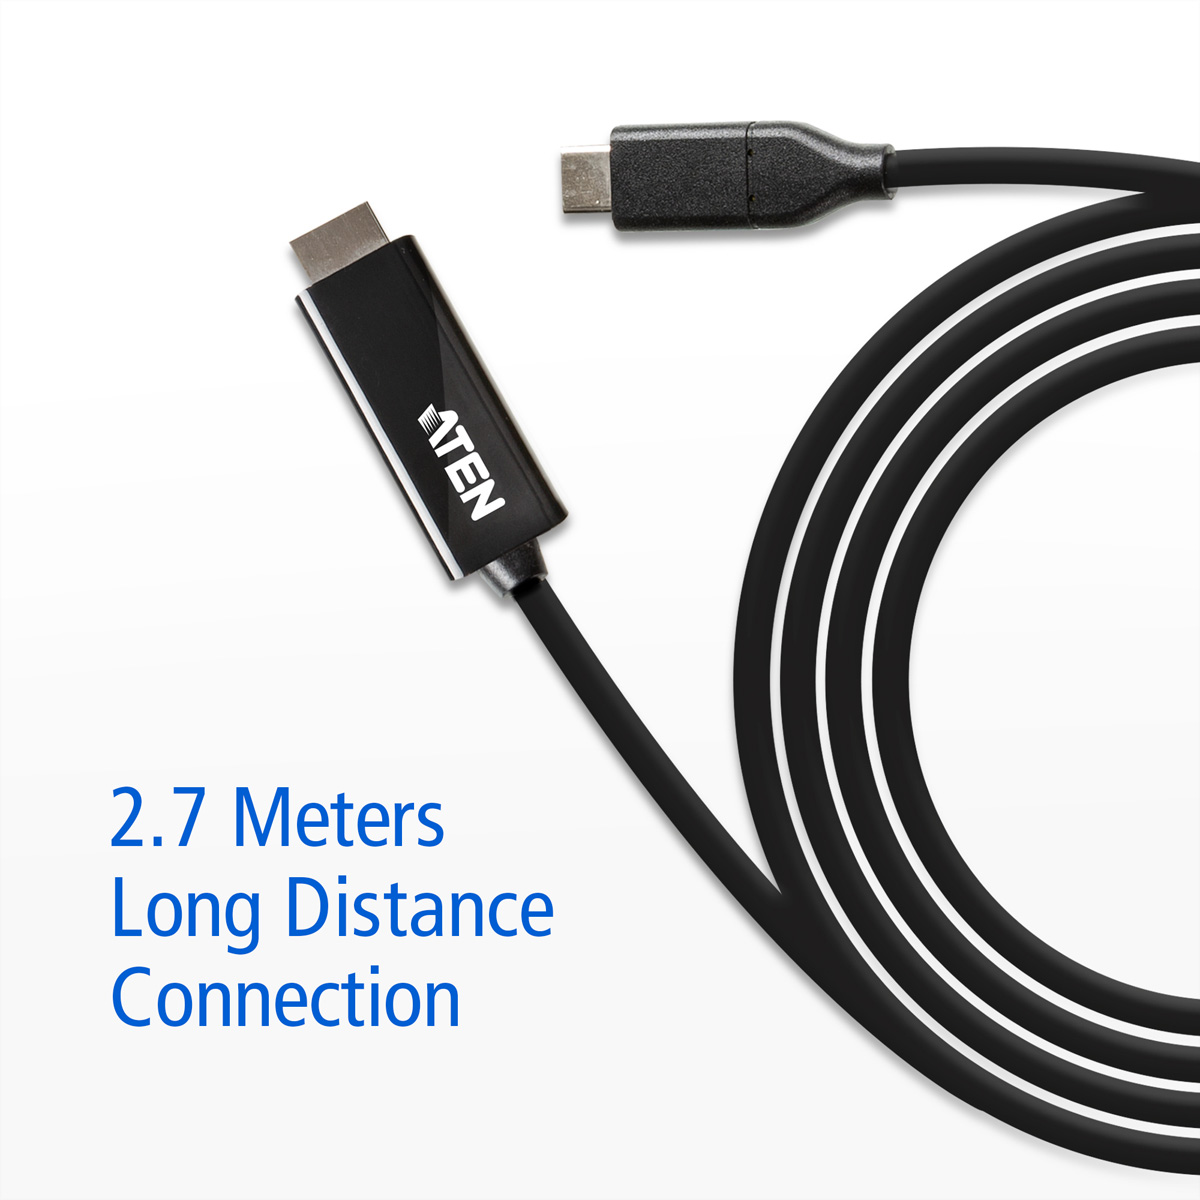 UC3238 HDMI Kabel USB-HDMI 4K to ATEN Adapter USB-C